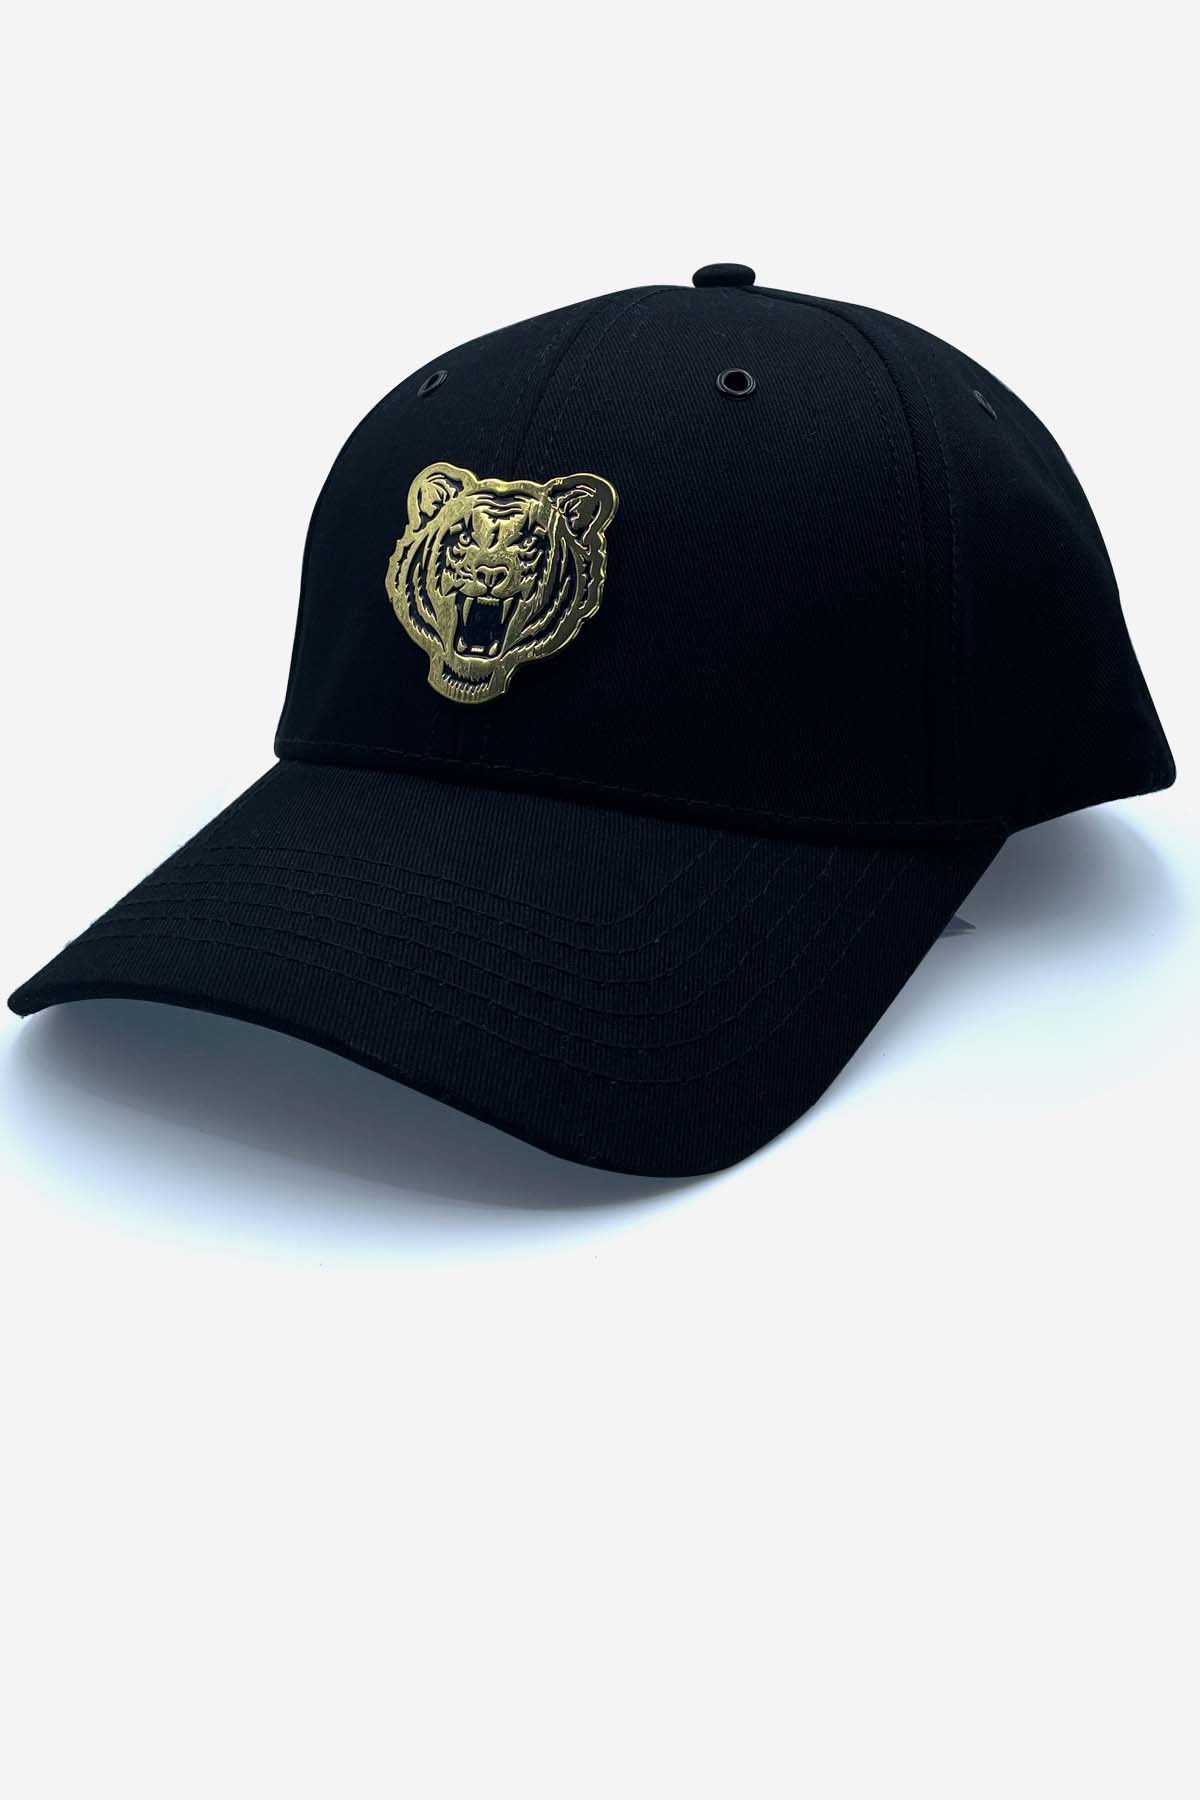 BLACK TIGER CAP WITH GOLD LOGO